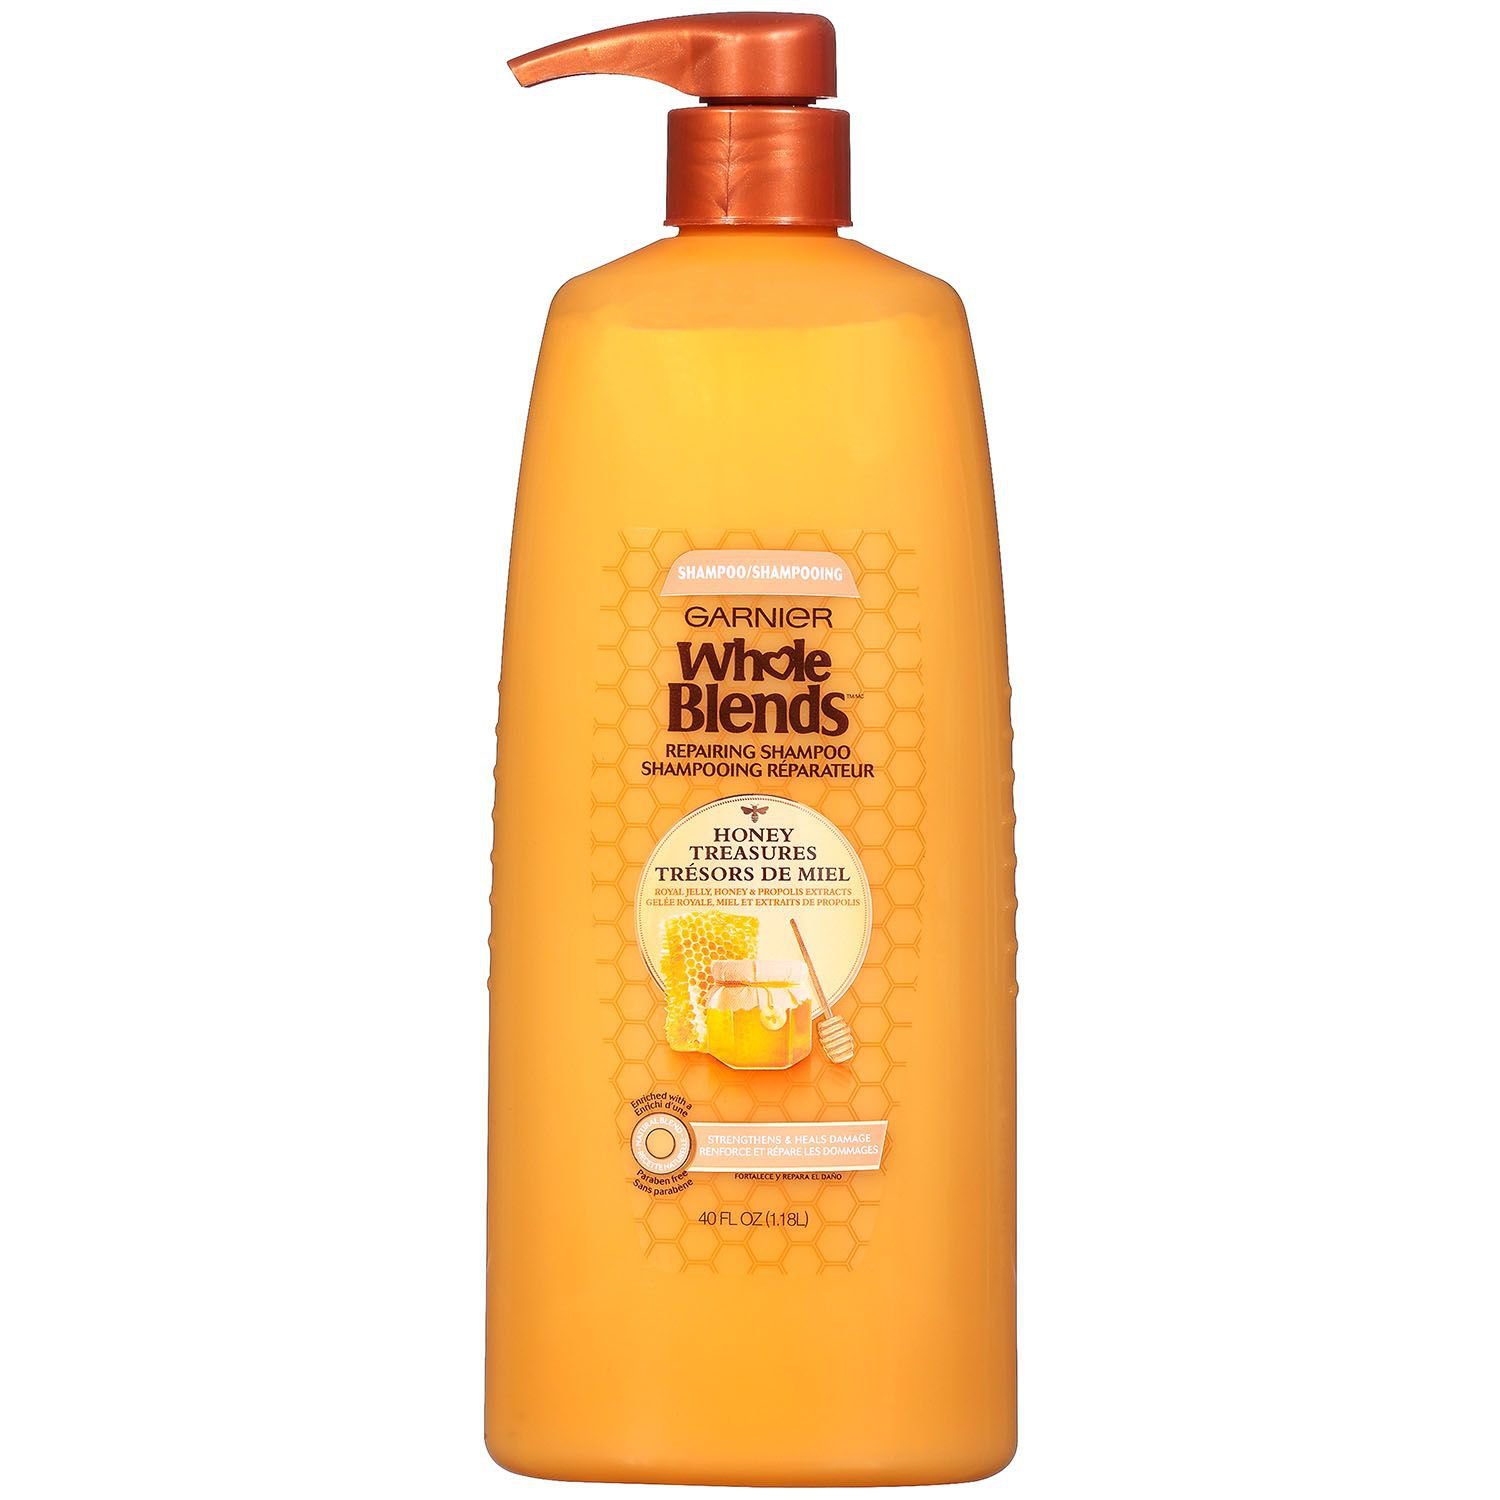 Garnier Whole Blends Honey Treasures Repairing Shampoo 40 fl. oz